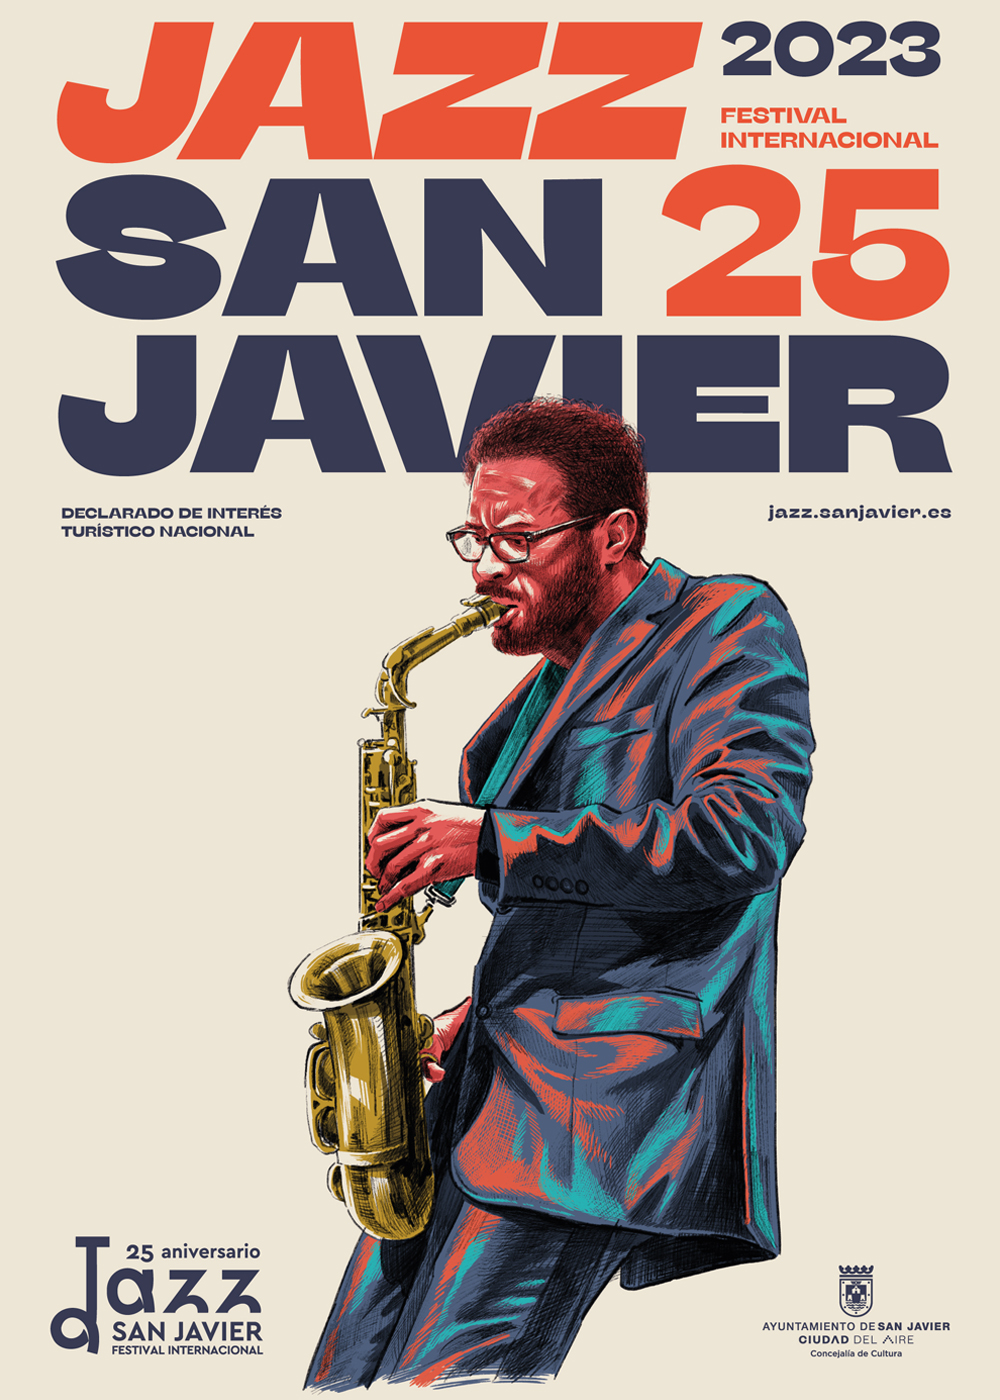 XXV San Javier International Jazz Festival 2023 poster